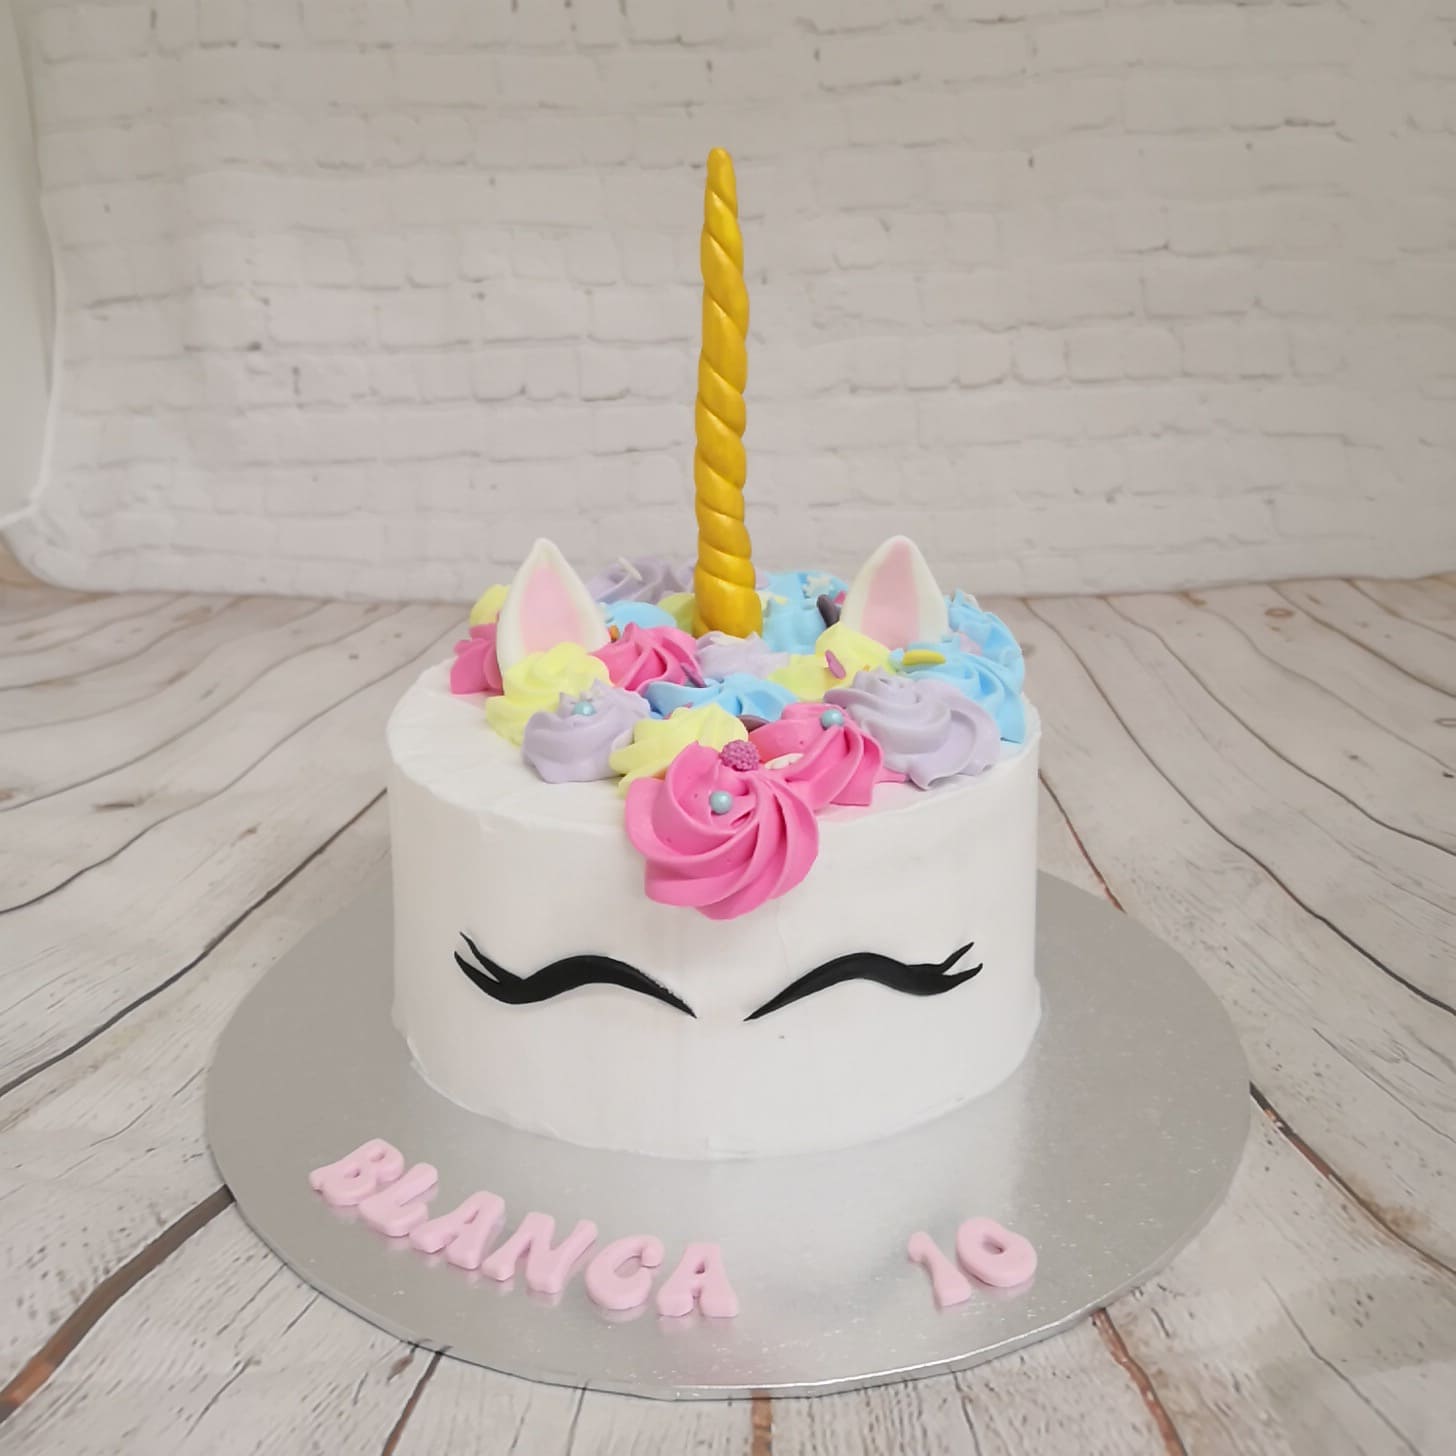 1) New Message!  Torta de minions, Pastel de cumpleaños de unicornio,  Pasteles de unicornio